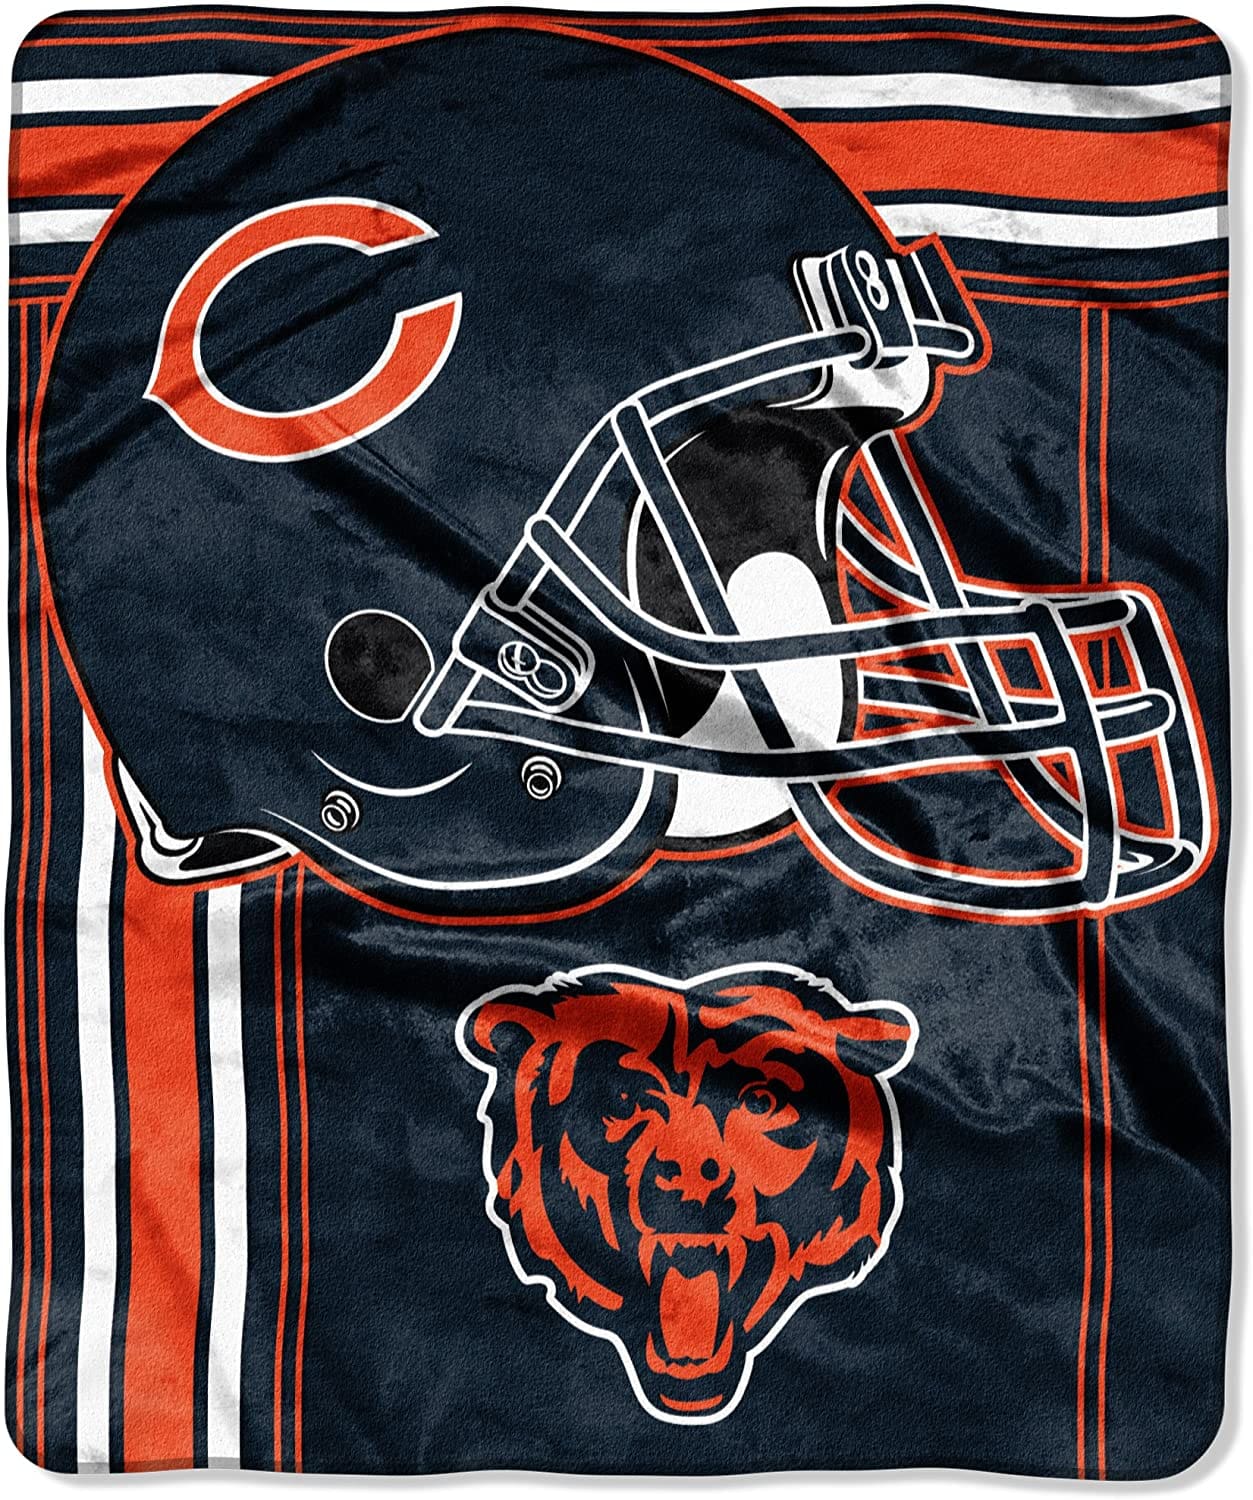 Officially Licensed Nfl Throw Chicago Bears Fleece Blanket